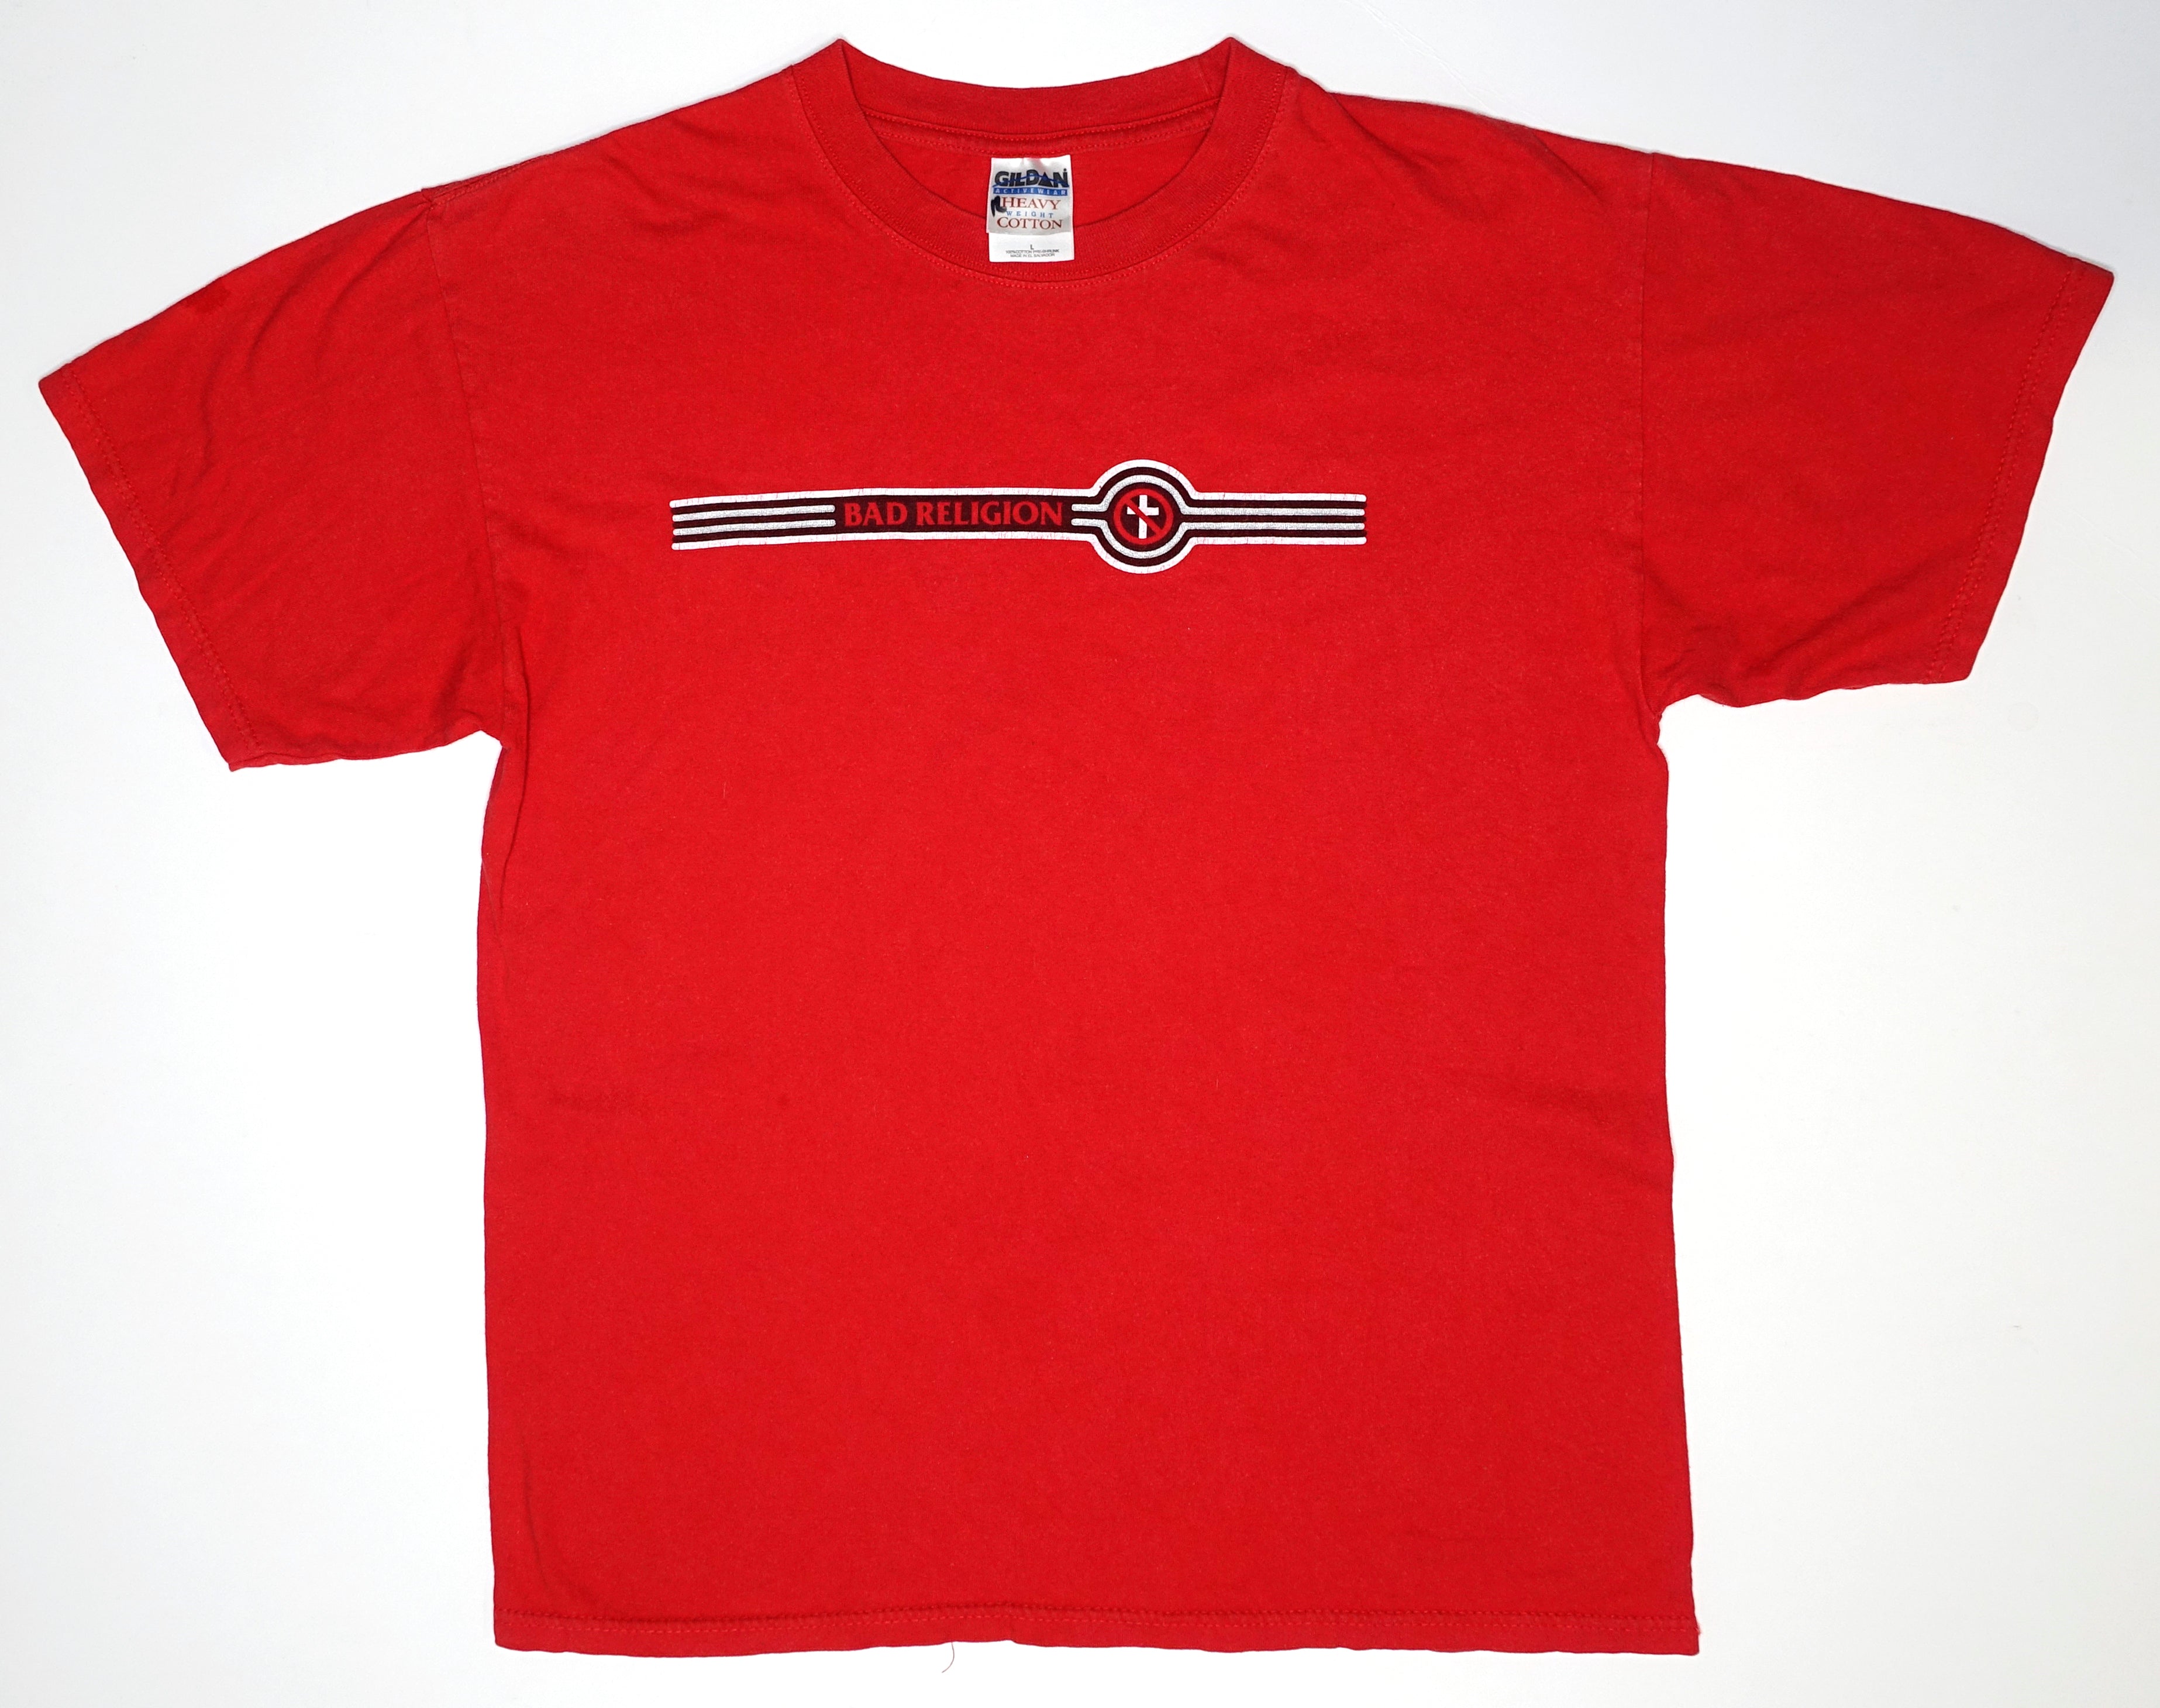 Bad Religion - Cross Buster Racing Stripes (Gildan) Tour Shirt Size Large